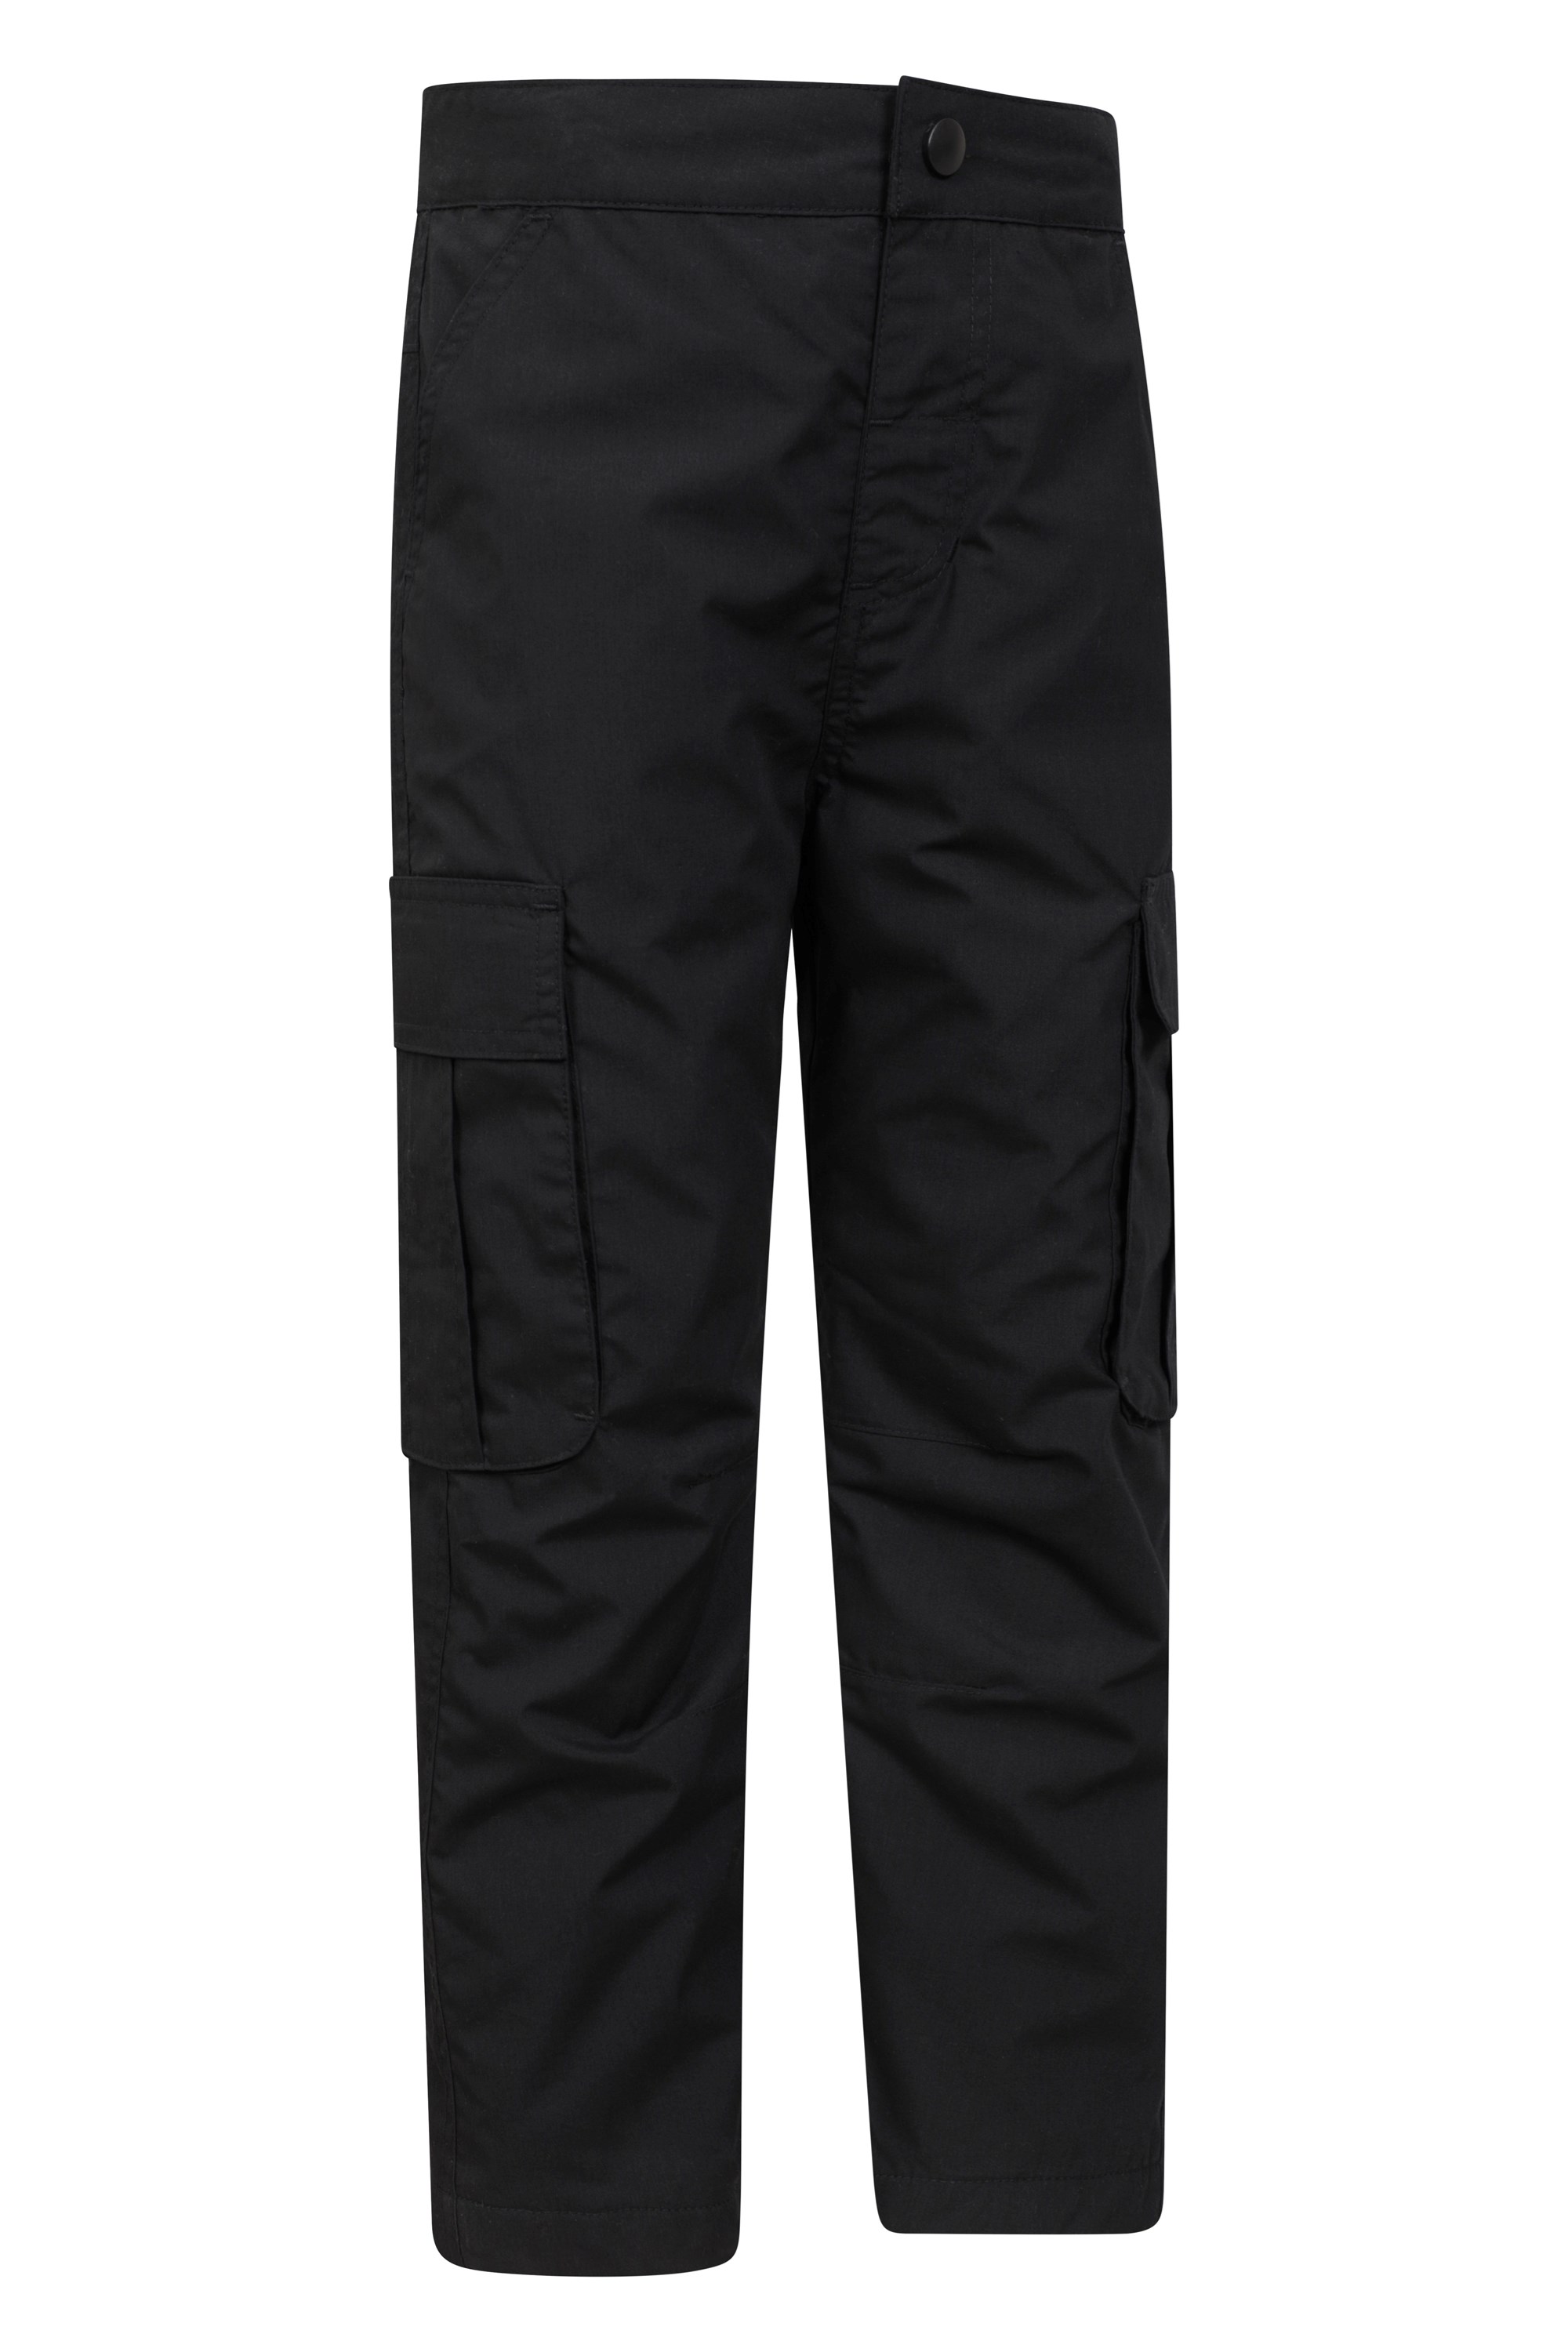 Men's Fleece Lined Cargo Pants Stretch Waterproof Winter Thermal Combat  Trousers | eBay